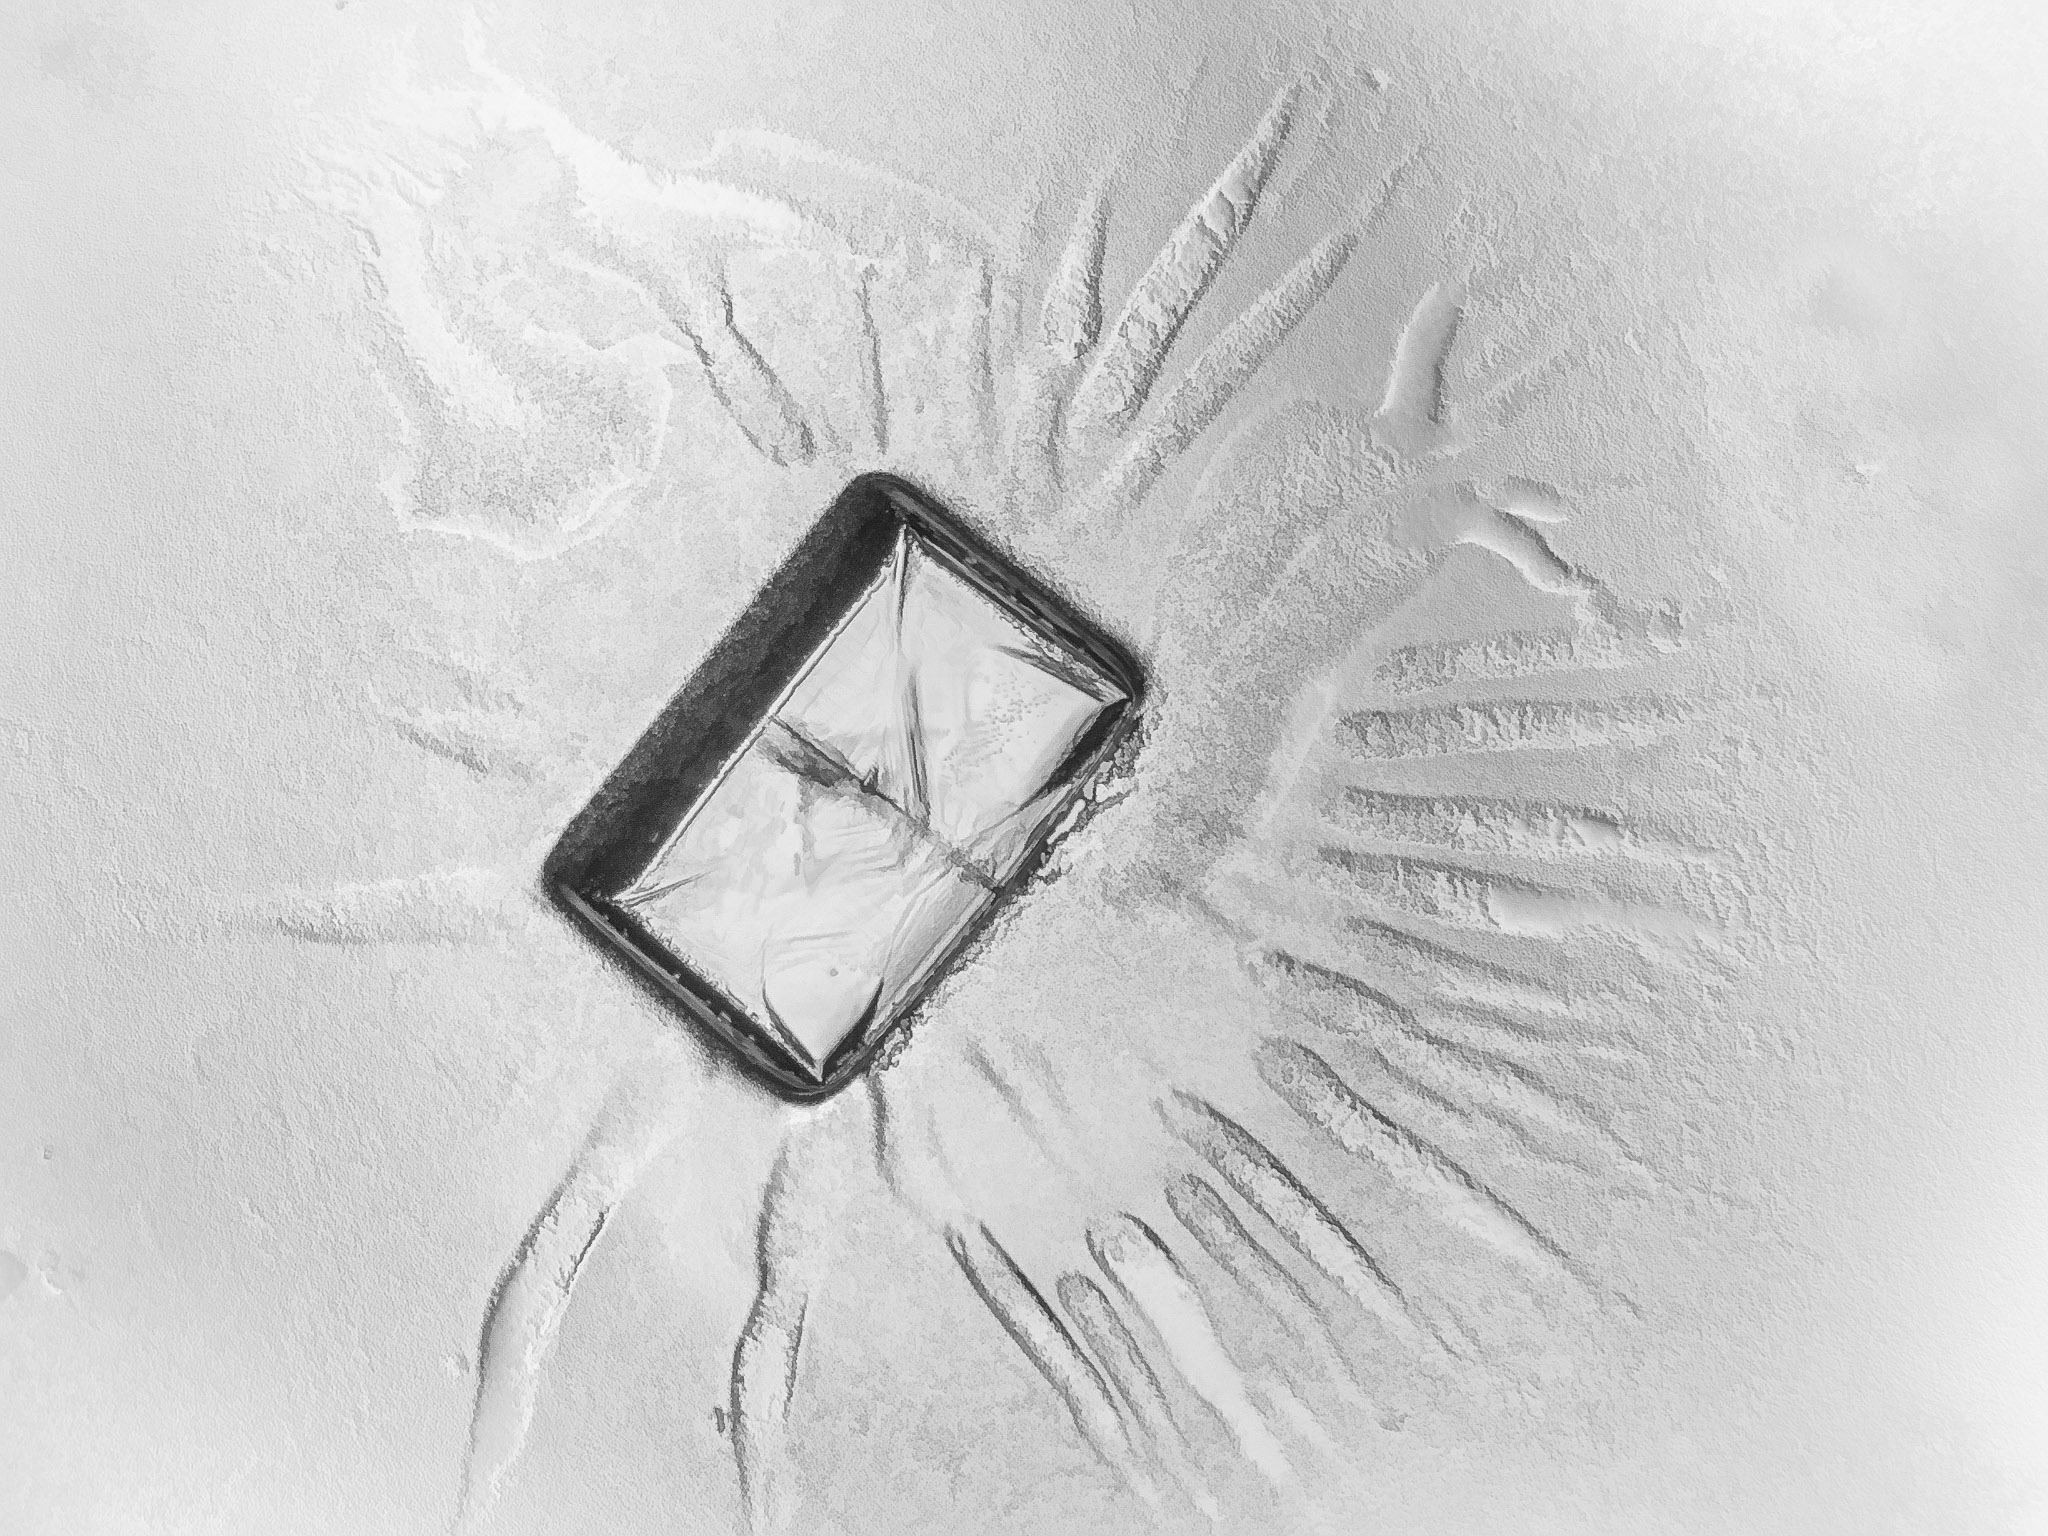 Microscopic Epson salt crystals at 4X.